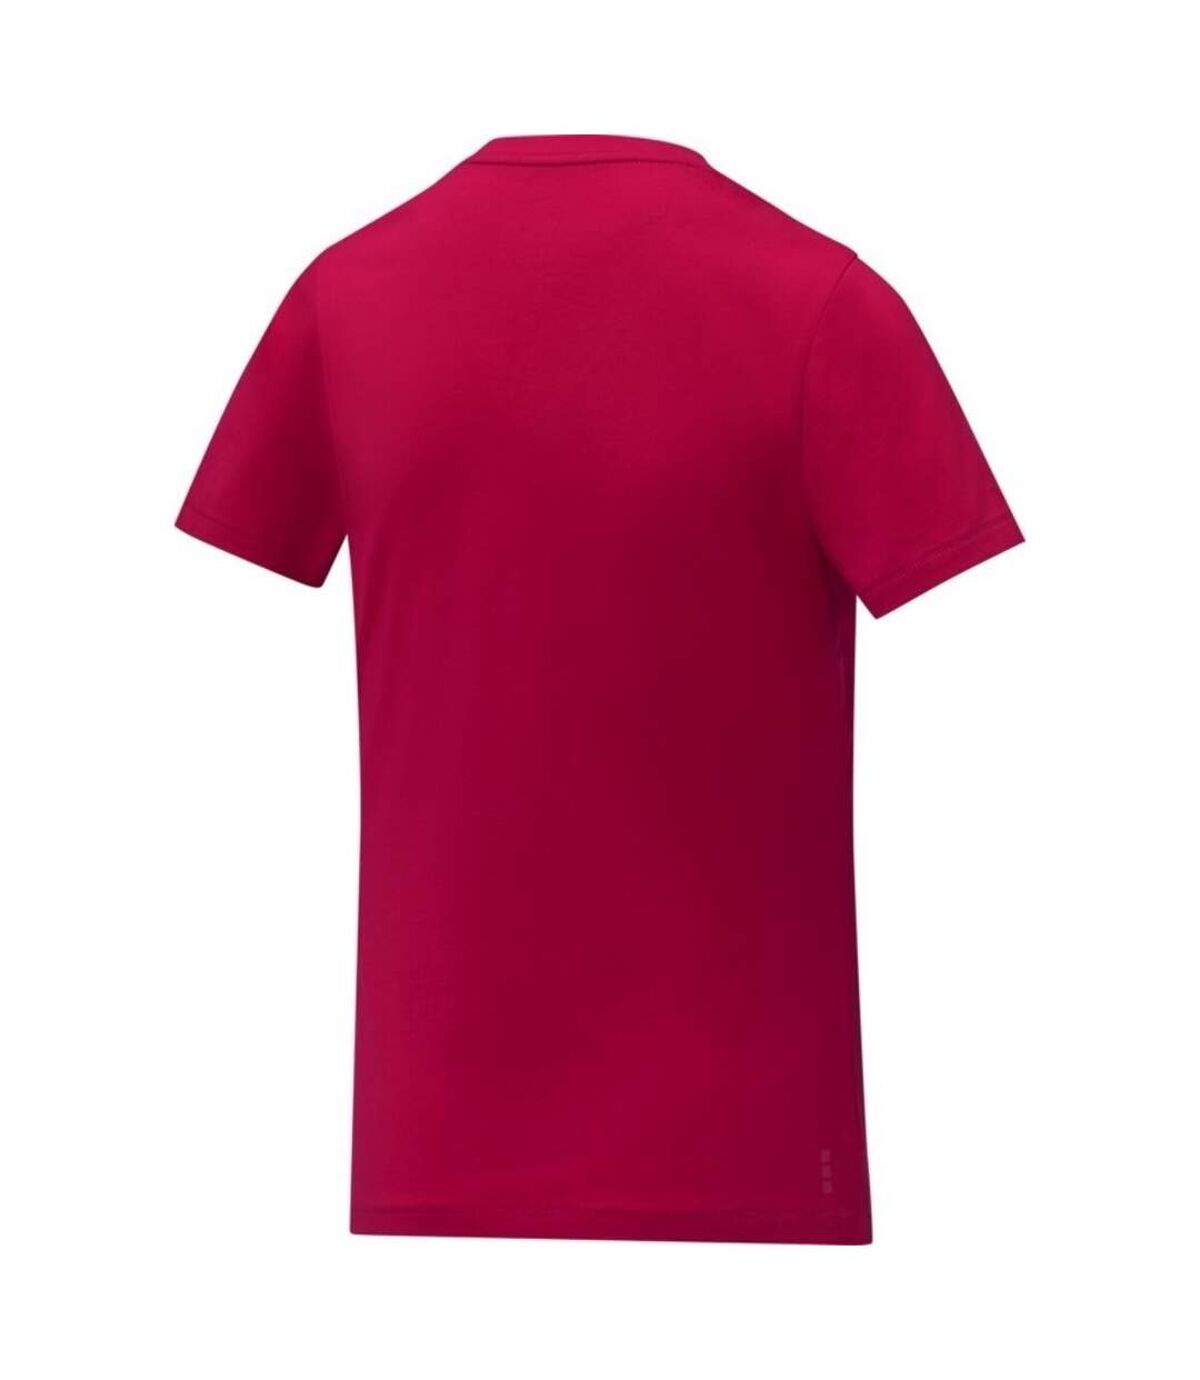 Elevate - T-shirt SOMOTO - Femme (Rouge) - UTPF3926